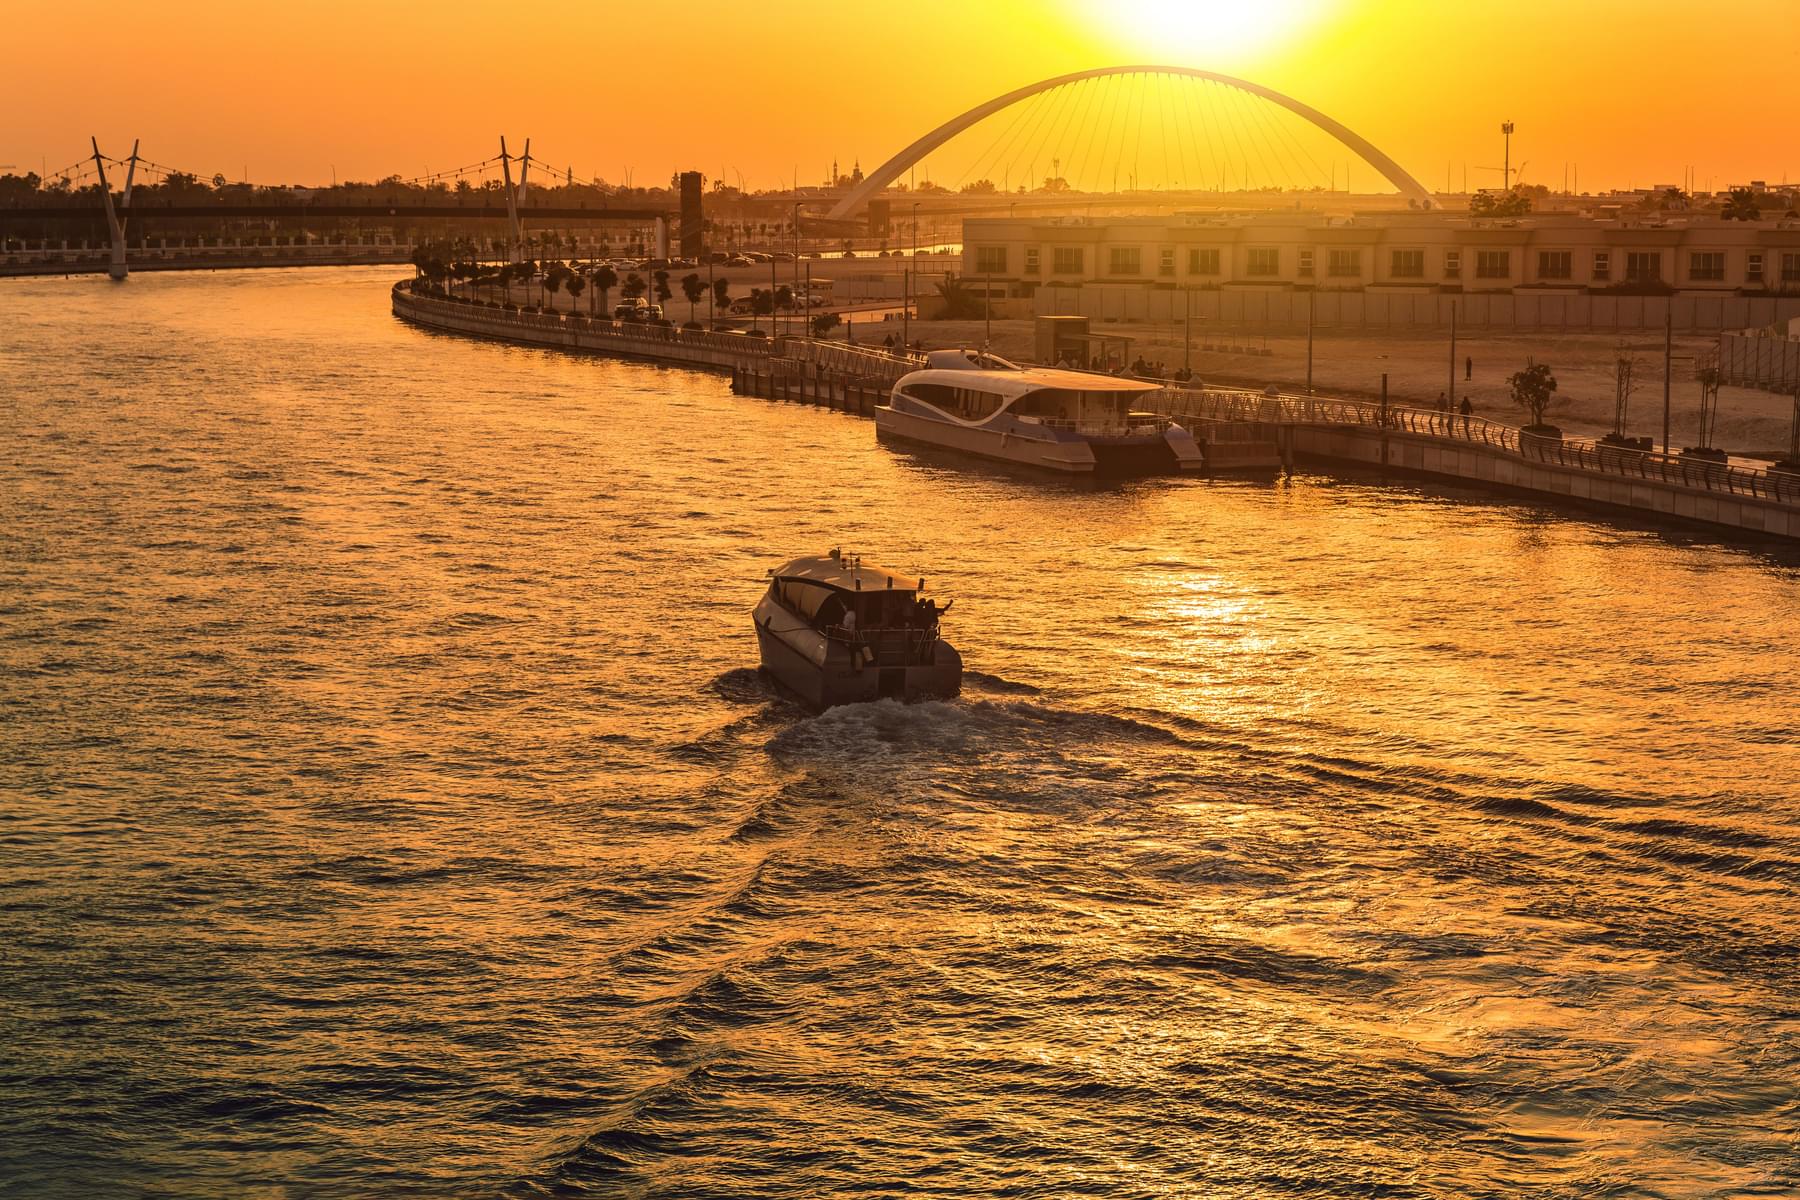 Sunset or Evening Dubai Canal Cruise